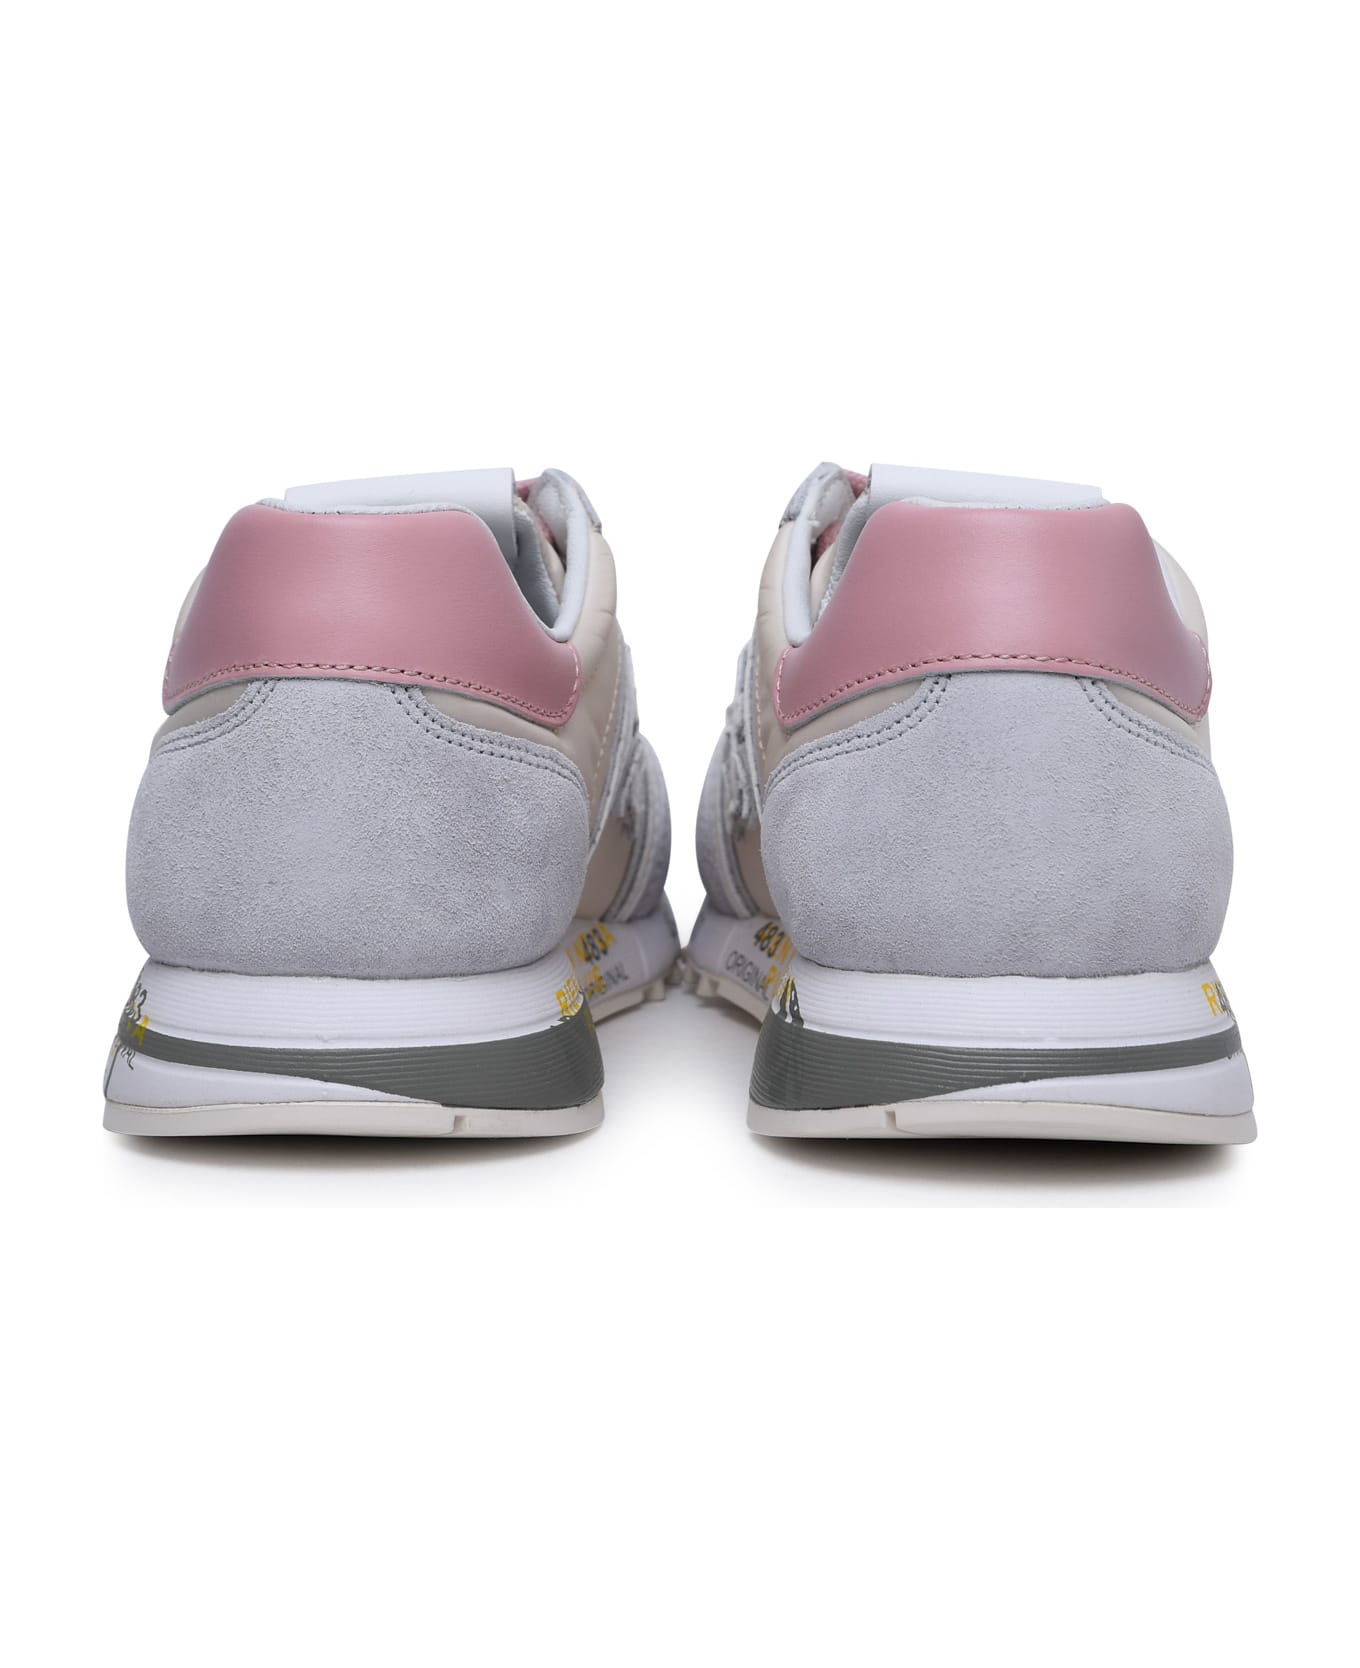 Premiata 'lucyd' Multicolor Leather And Nylon Sneakers - Multicolor スニーカー